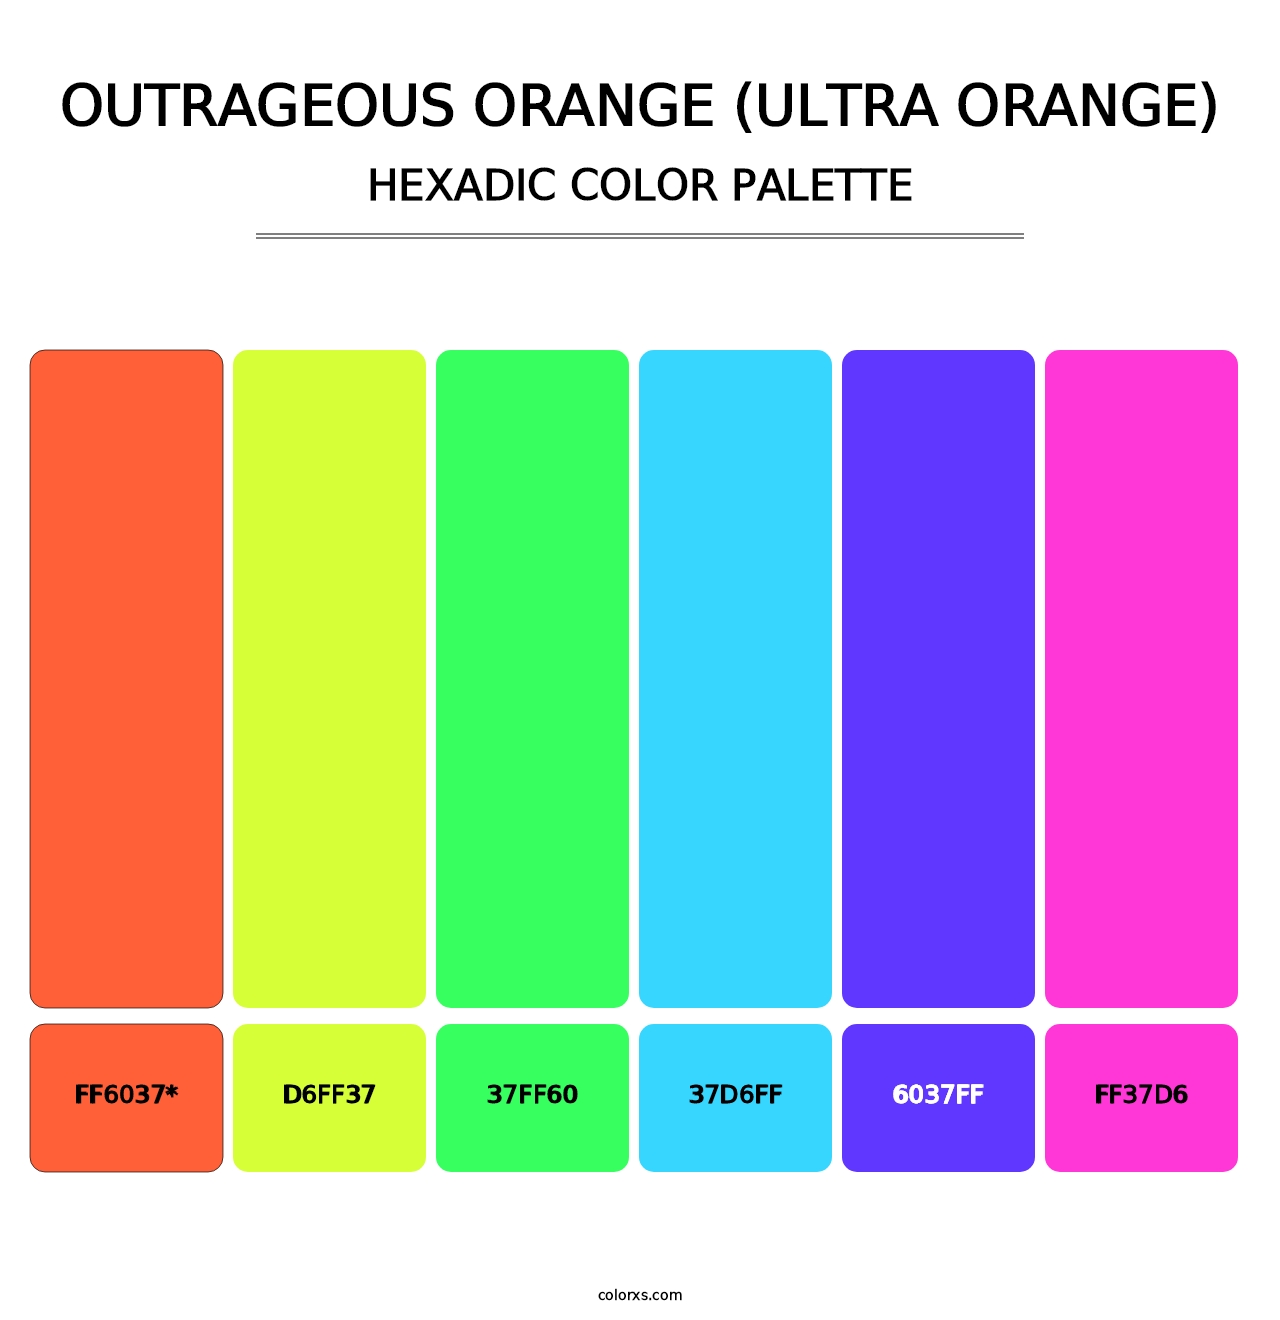 Outrageous Orange (Ultra Orange) - Hexadic Color Palette